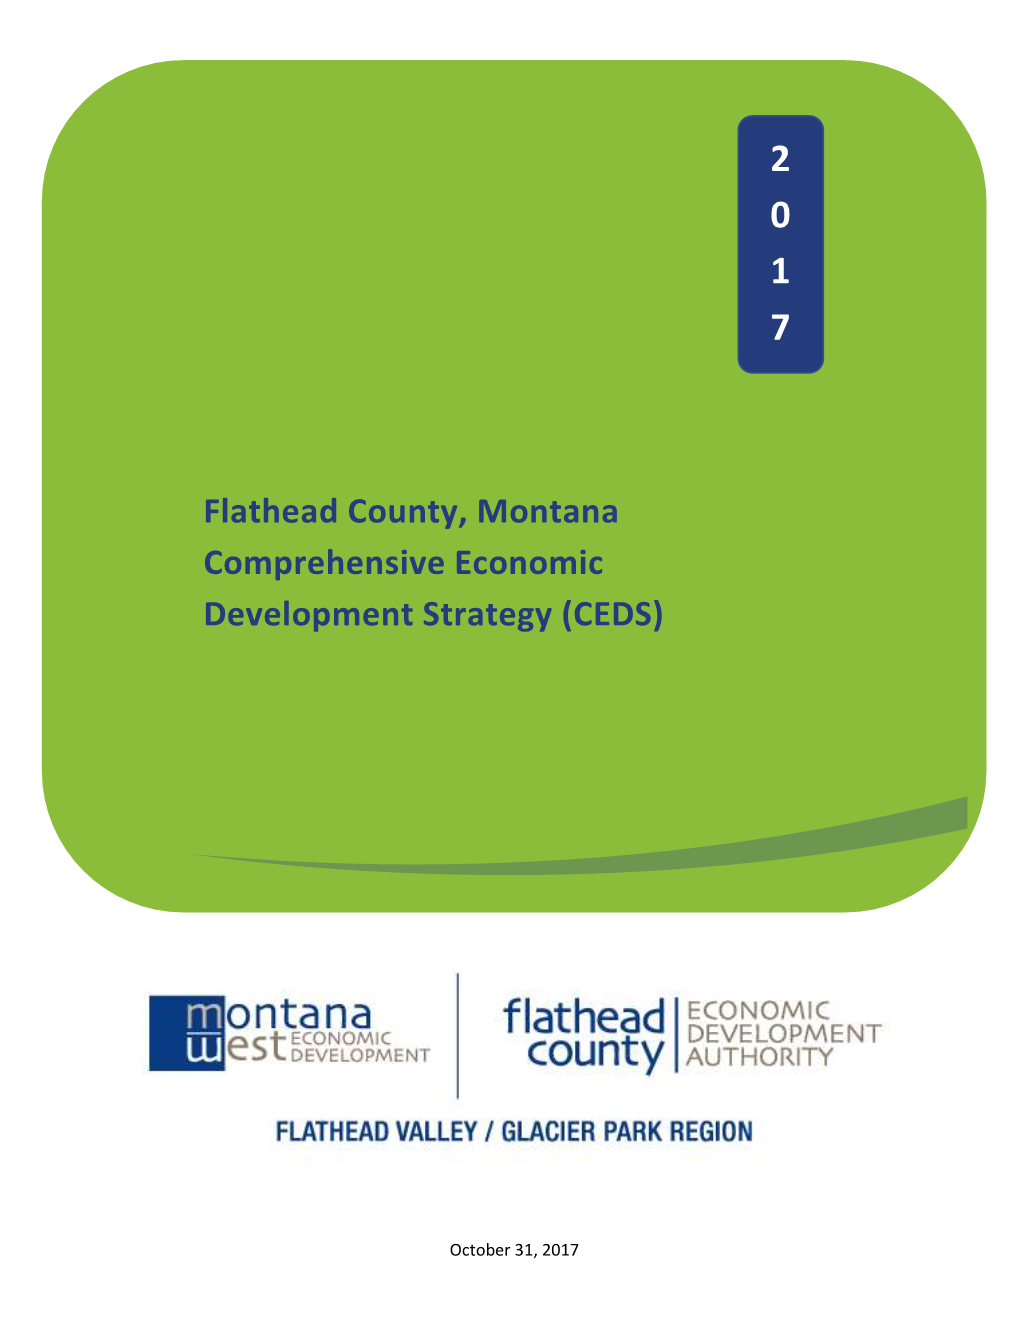 Flathead County, Montana Comprehensive Economic Development Strategy (CEDS)